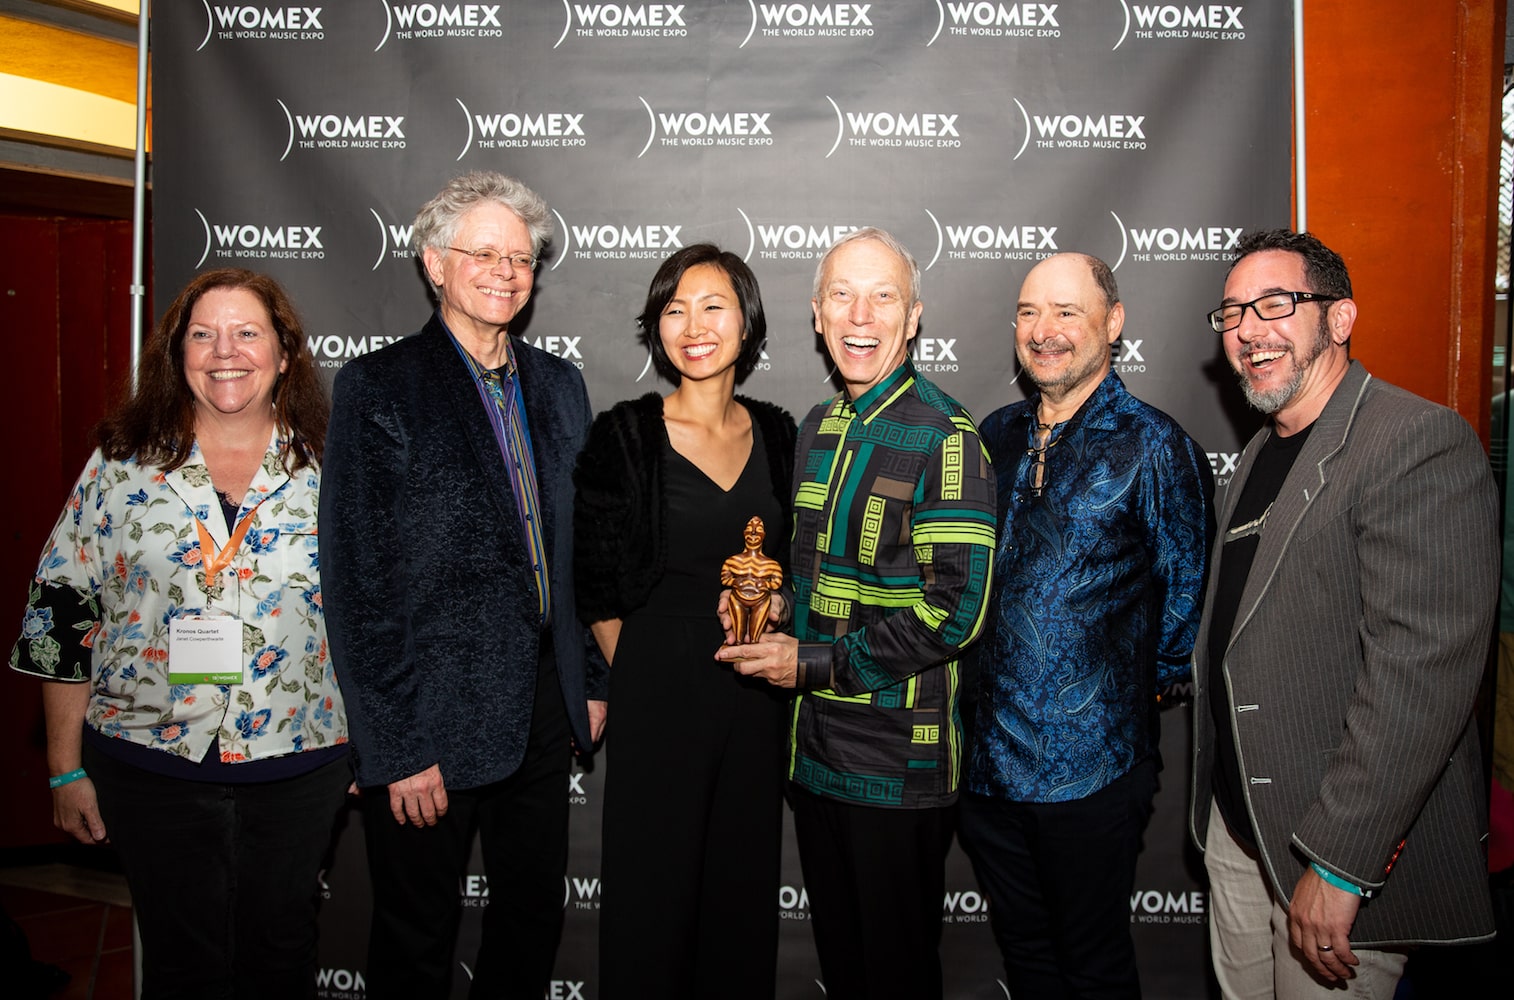 Janet Cowperthwaite, David Harrington, Sunny Yang, Hank Dutt, John Sherba, and Bill Bragin at WOMEX 18 / photo by Jacob Crawfurd